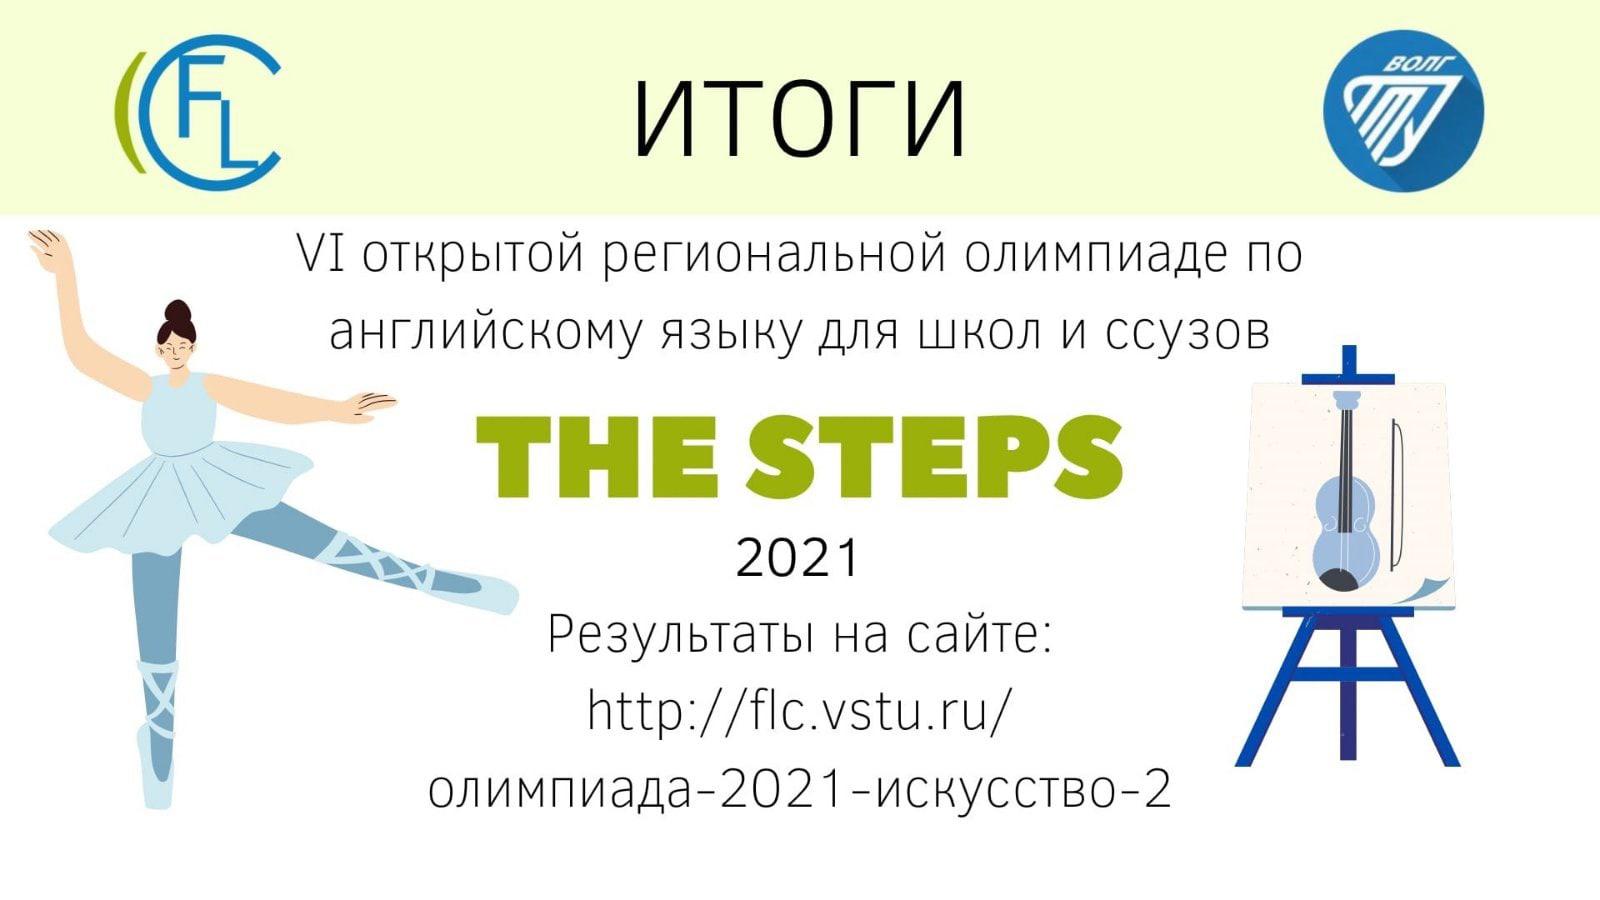 The steps.jpg